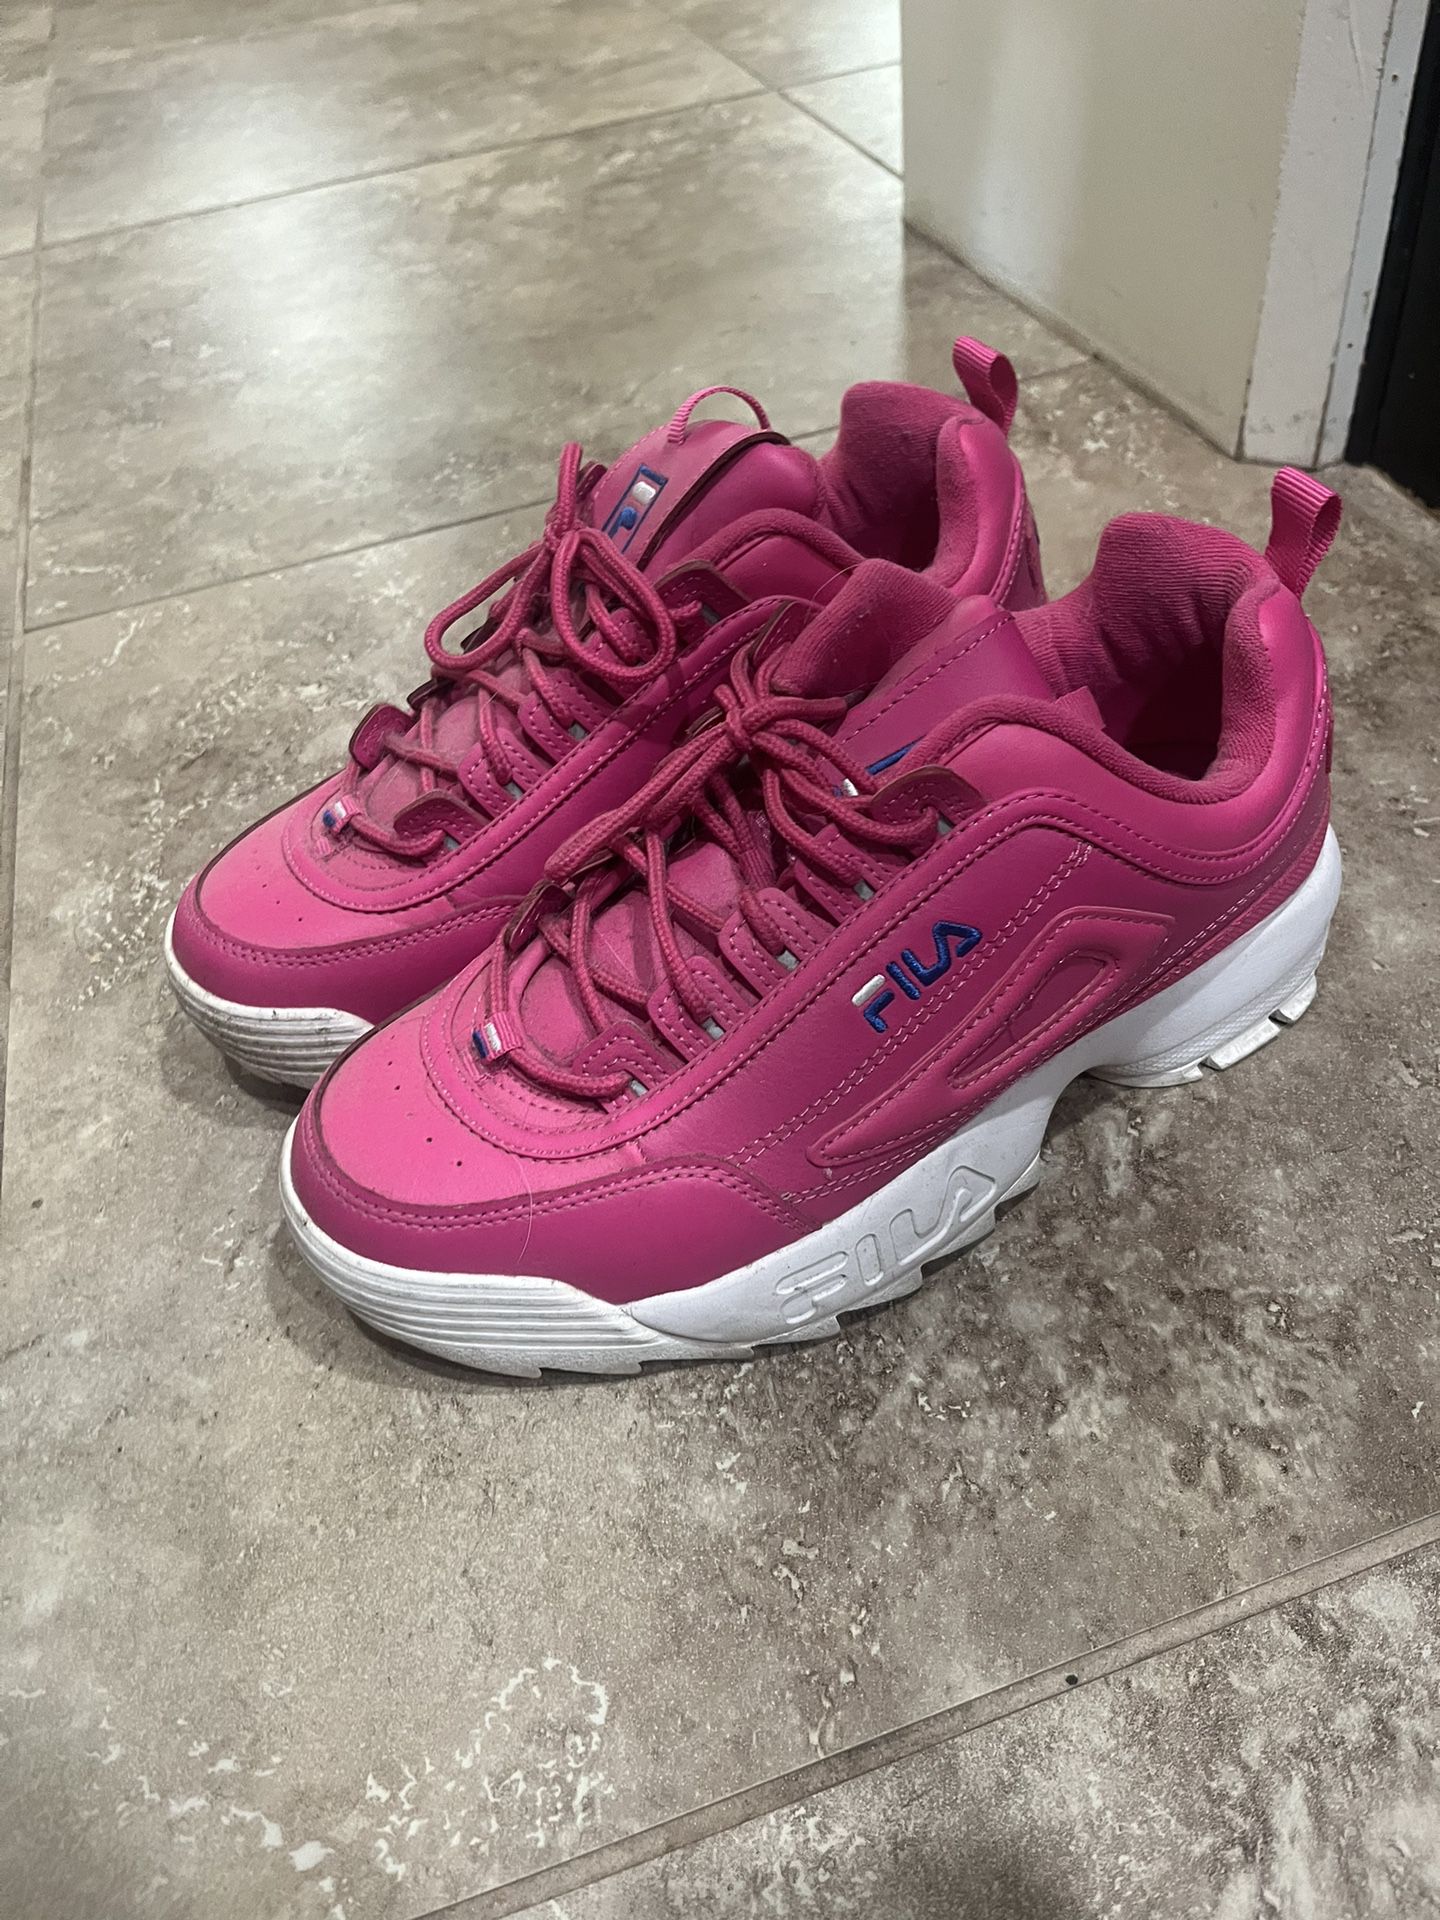 Hot Pink Fila Shoes